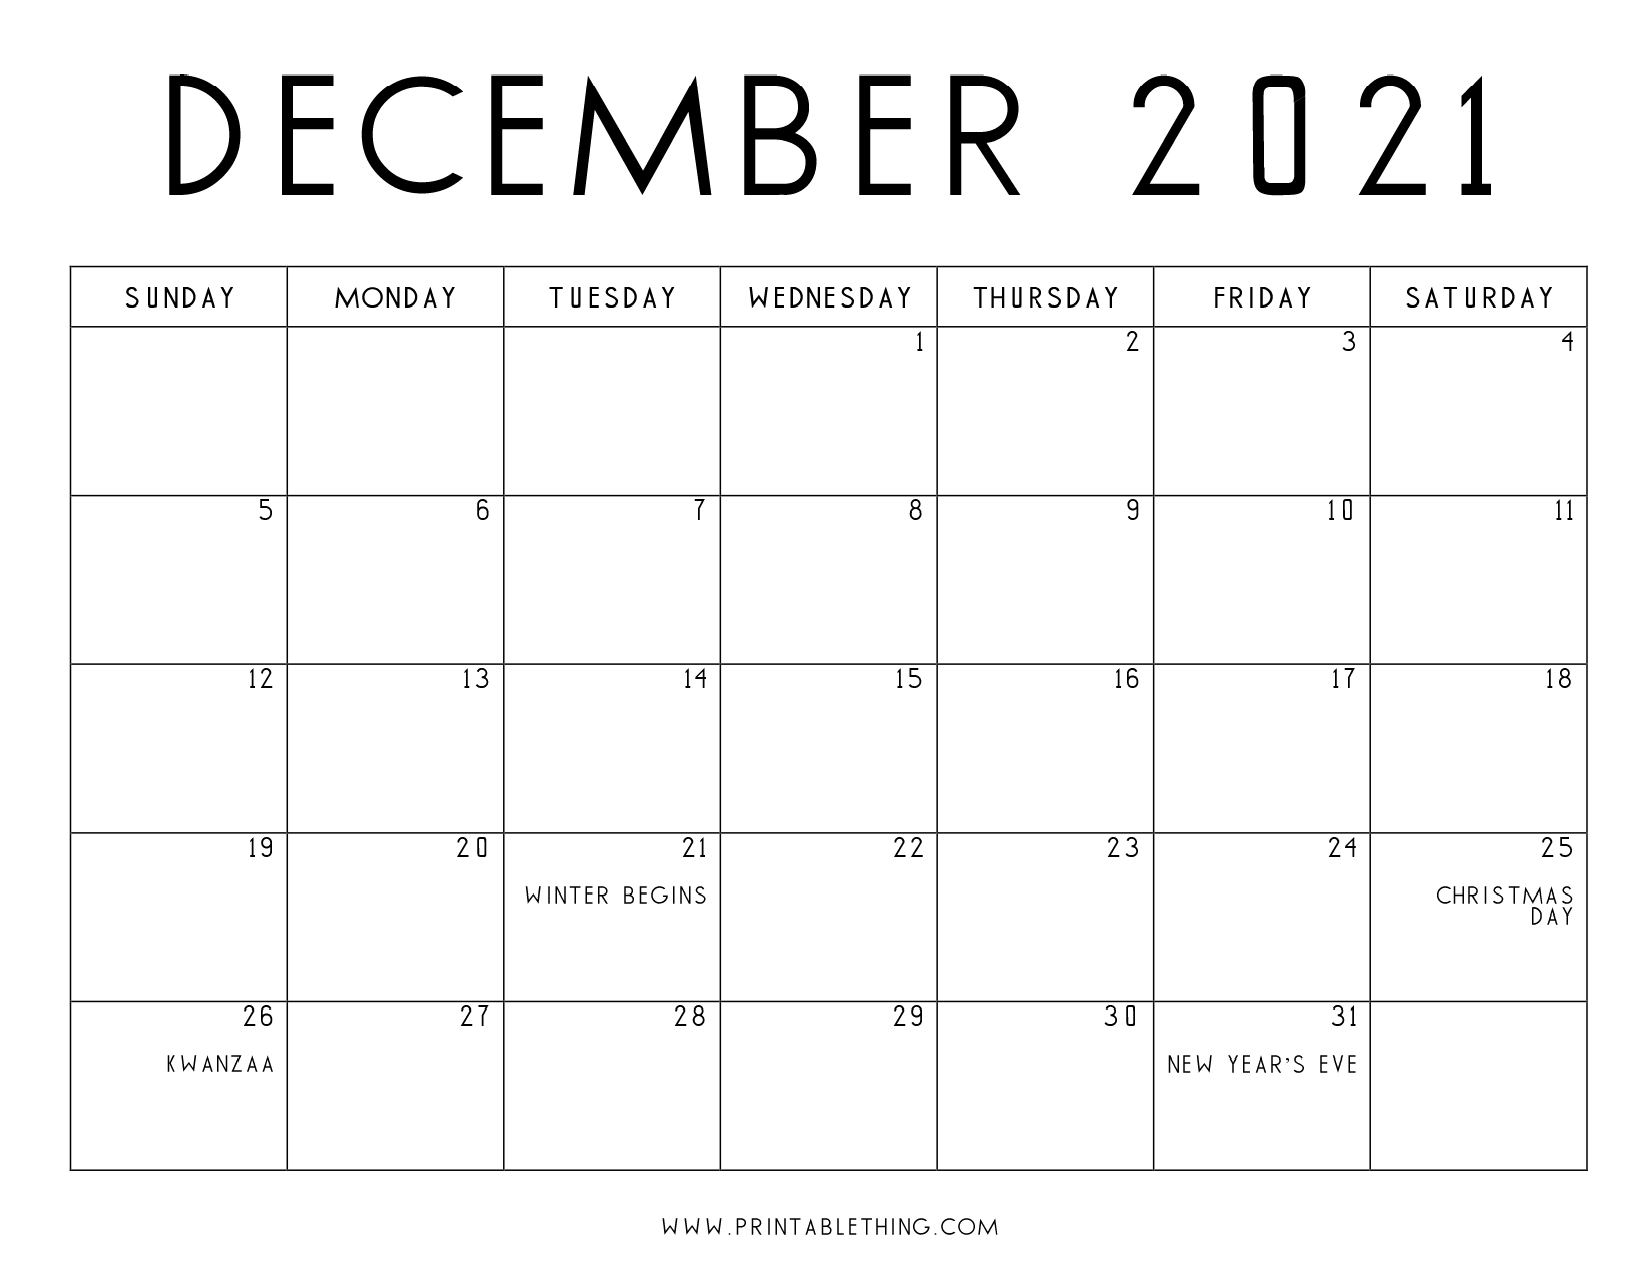 December 2021 Calendar Pdf, December 2021 Calendar Image Print